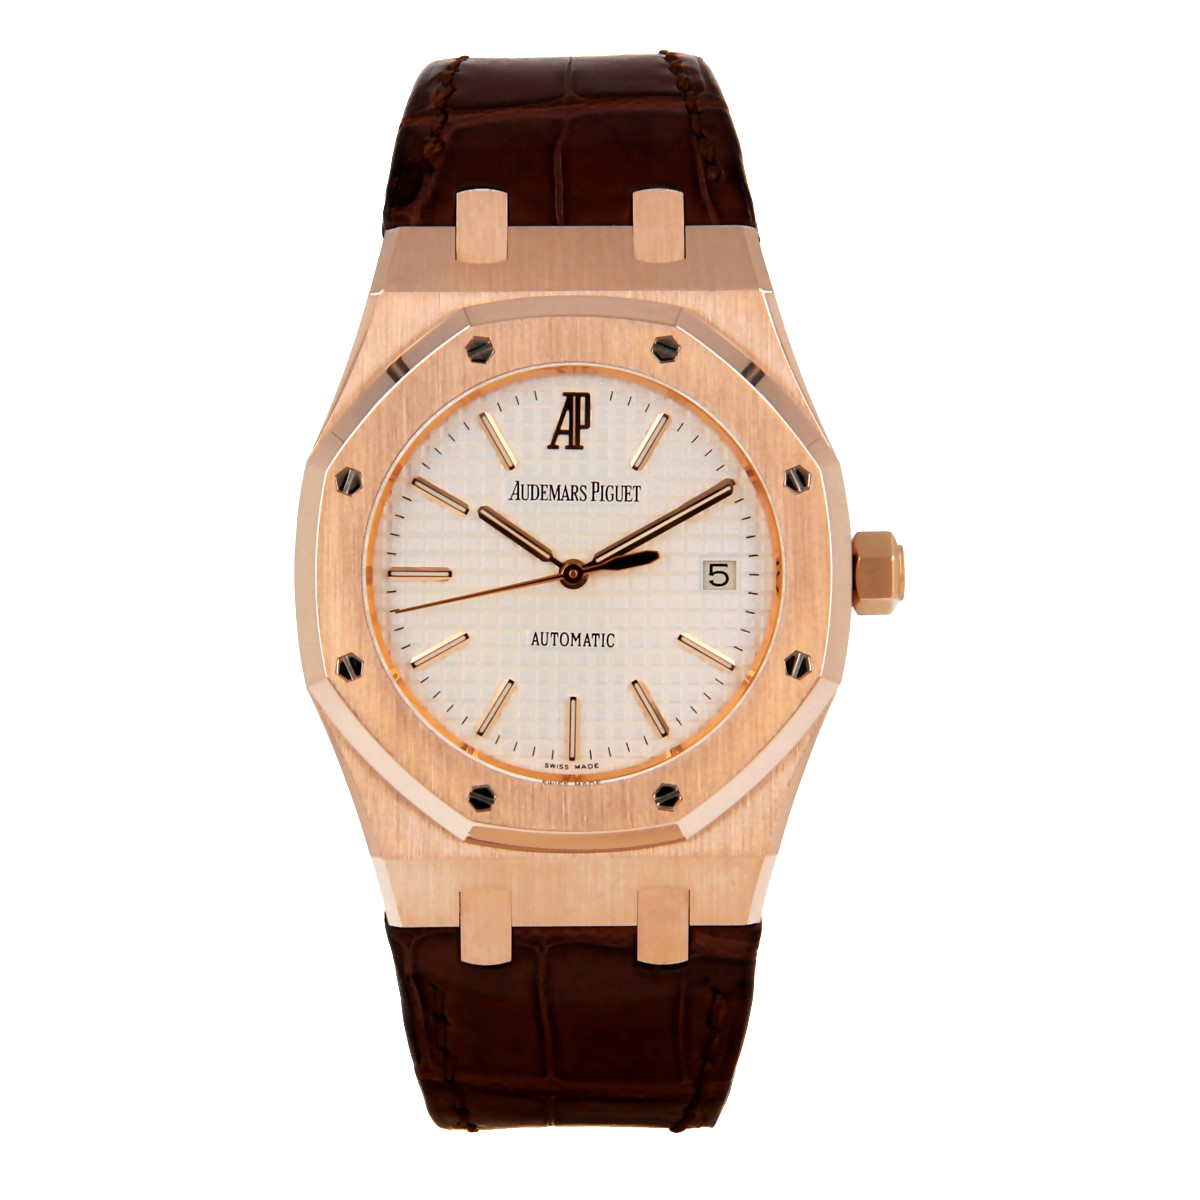 Audemars Piguet Royal Oak 15300OR 39mm | Buy pre-owned Audemars Piguet watches